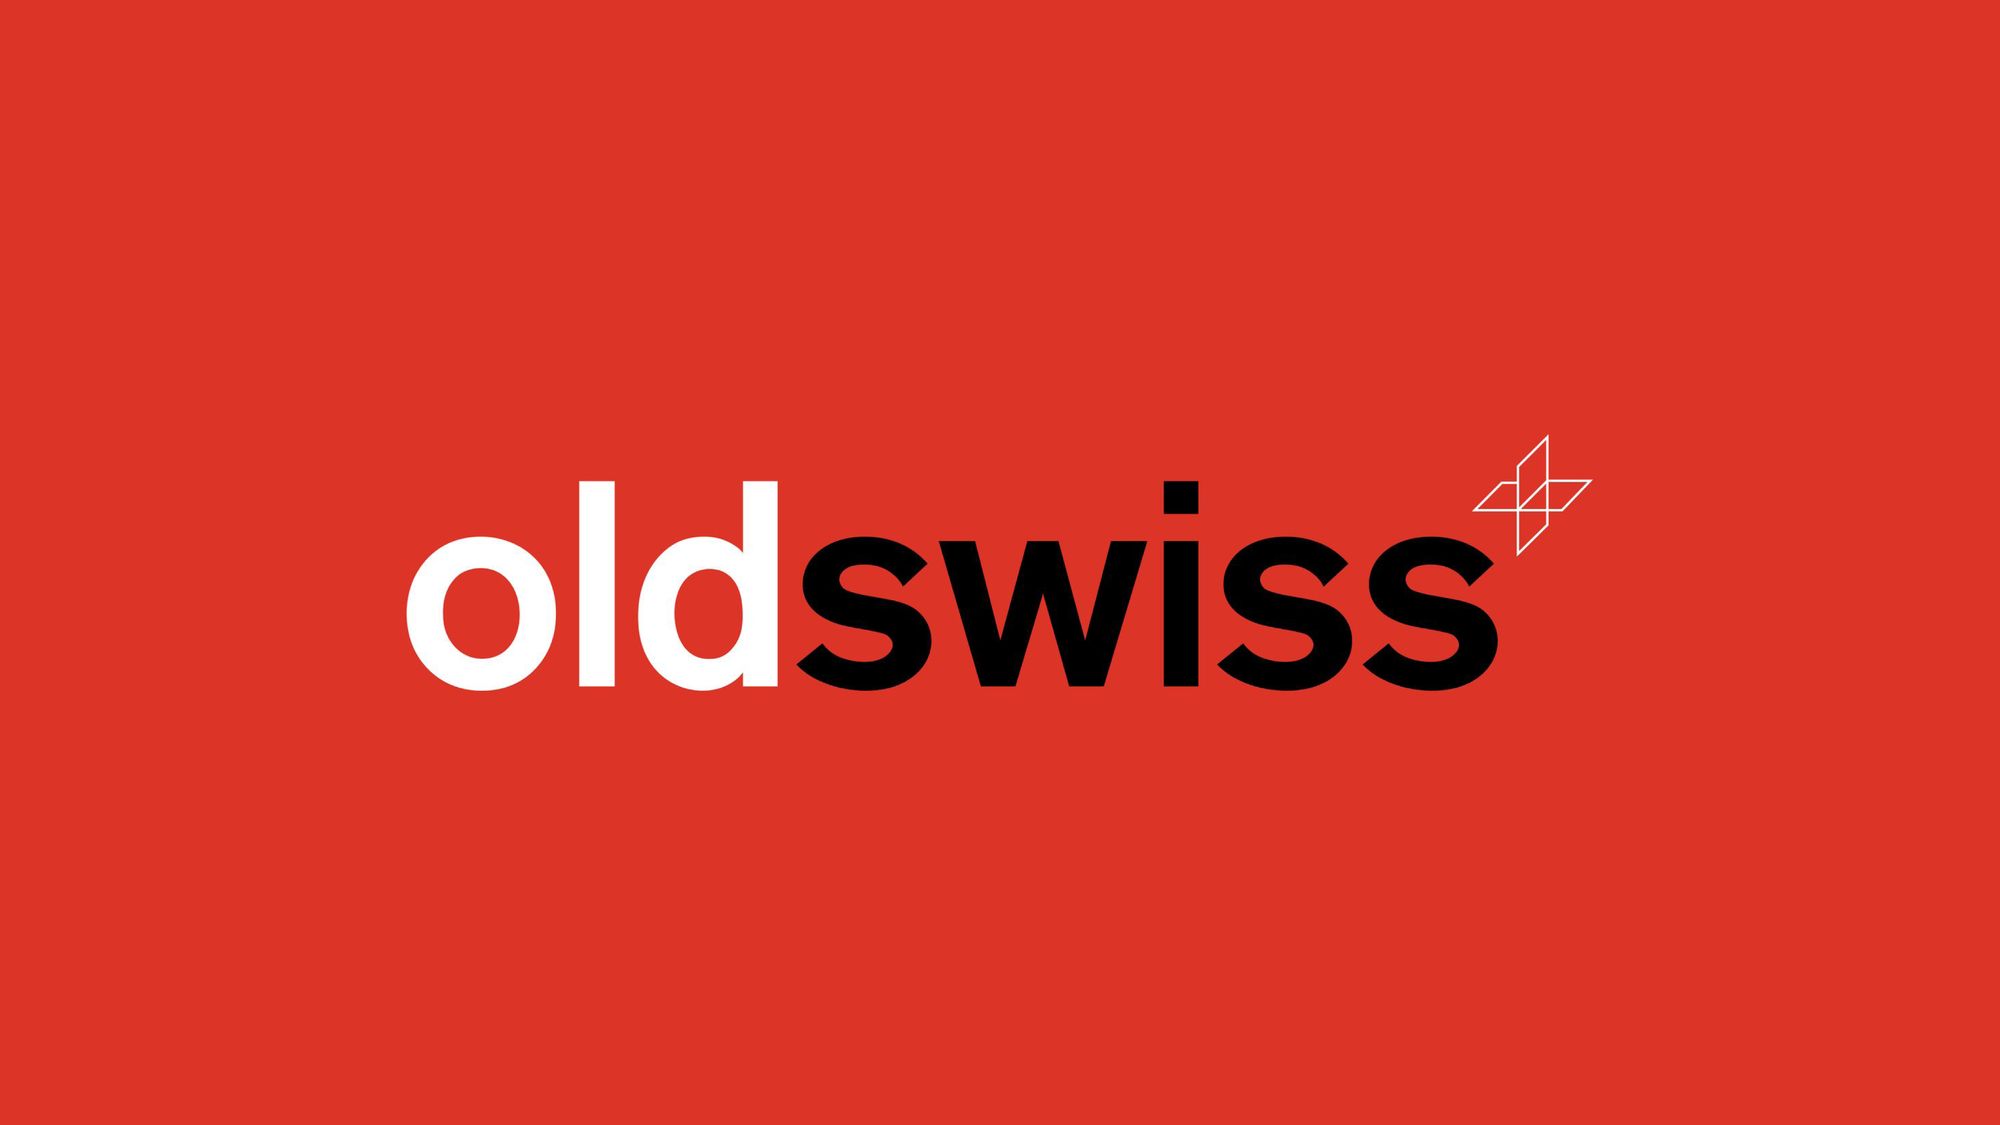 Old Swiss